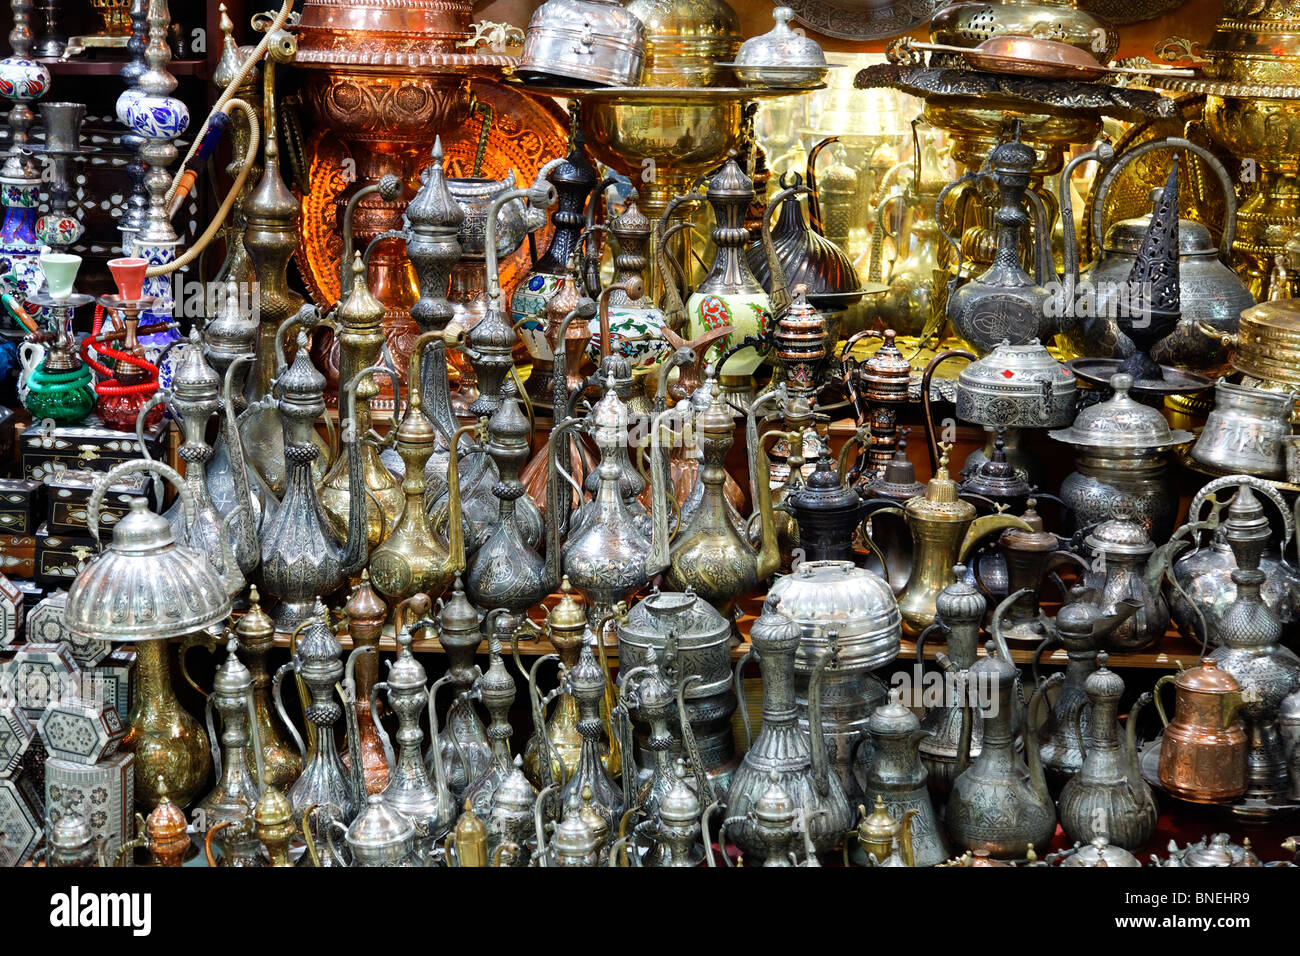 https://c8.alamy.com/comp/BNEHR9/shop-display-of-coffee-pots-inside-the-grand-bazaar-istanbul-turkey-BNEHR9.jpg